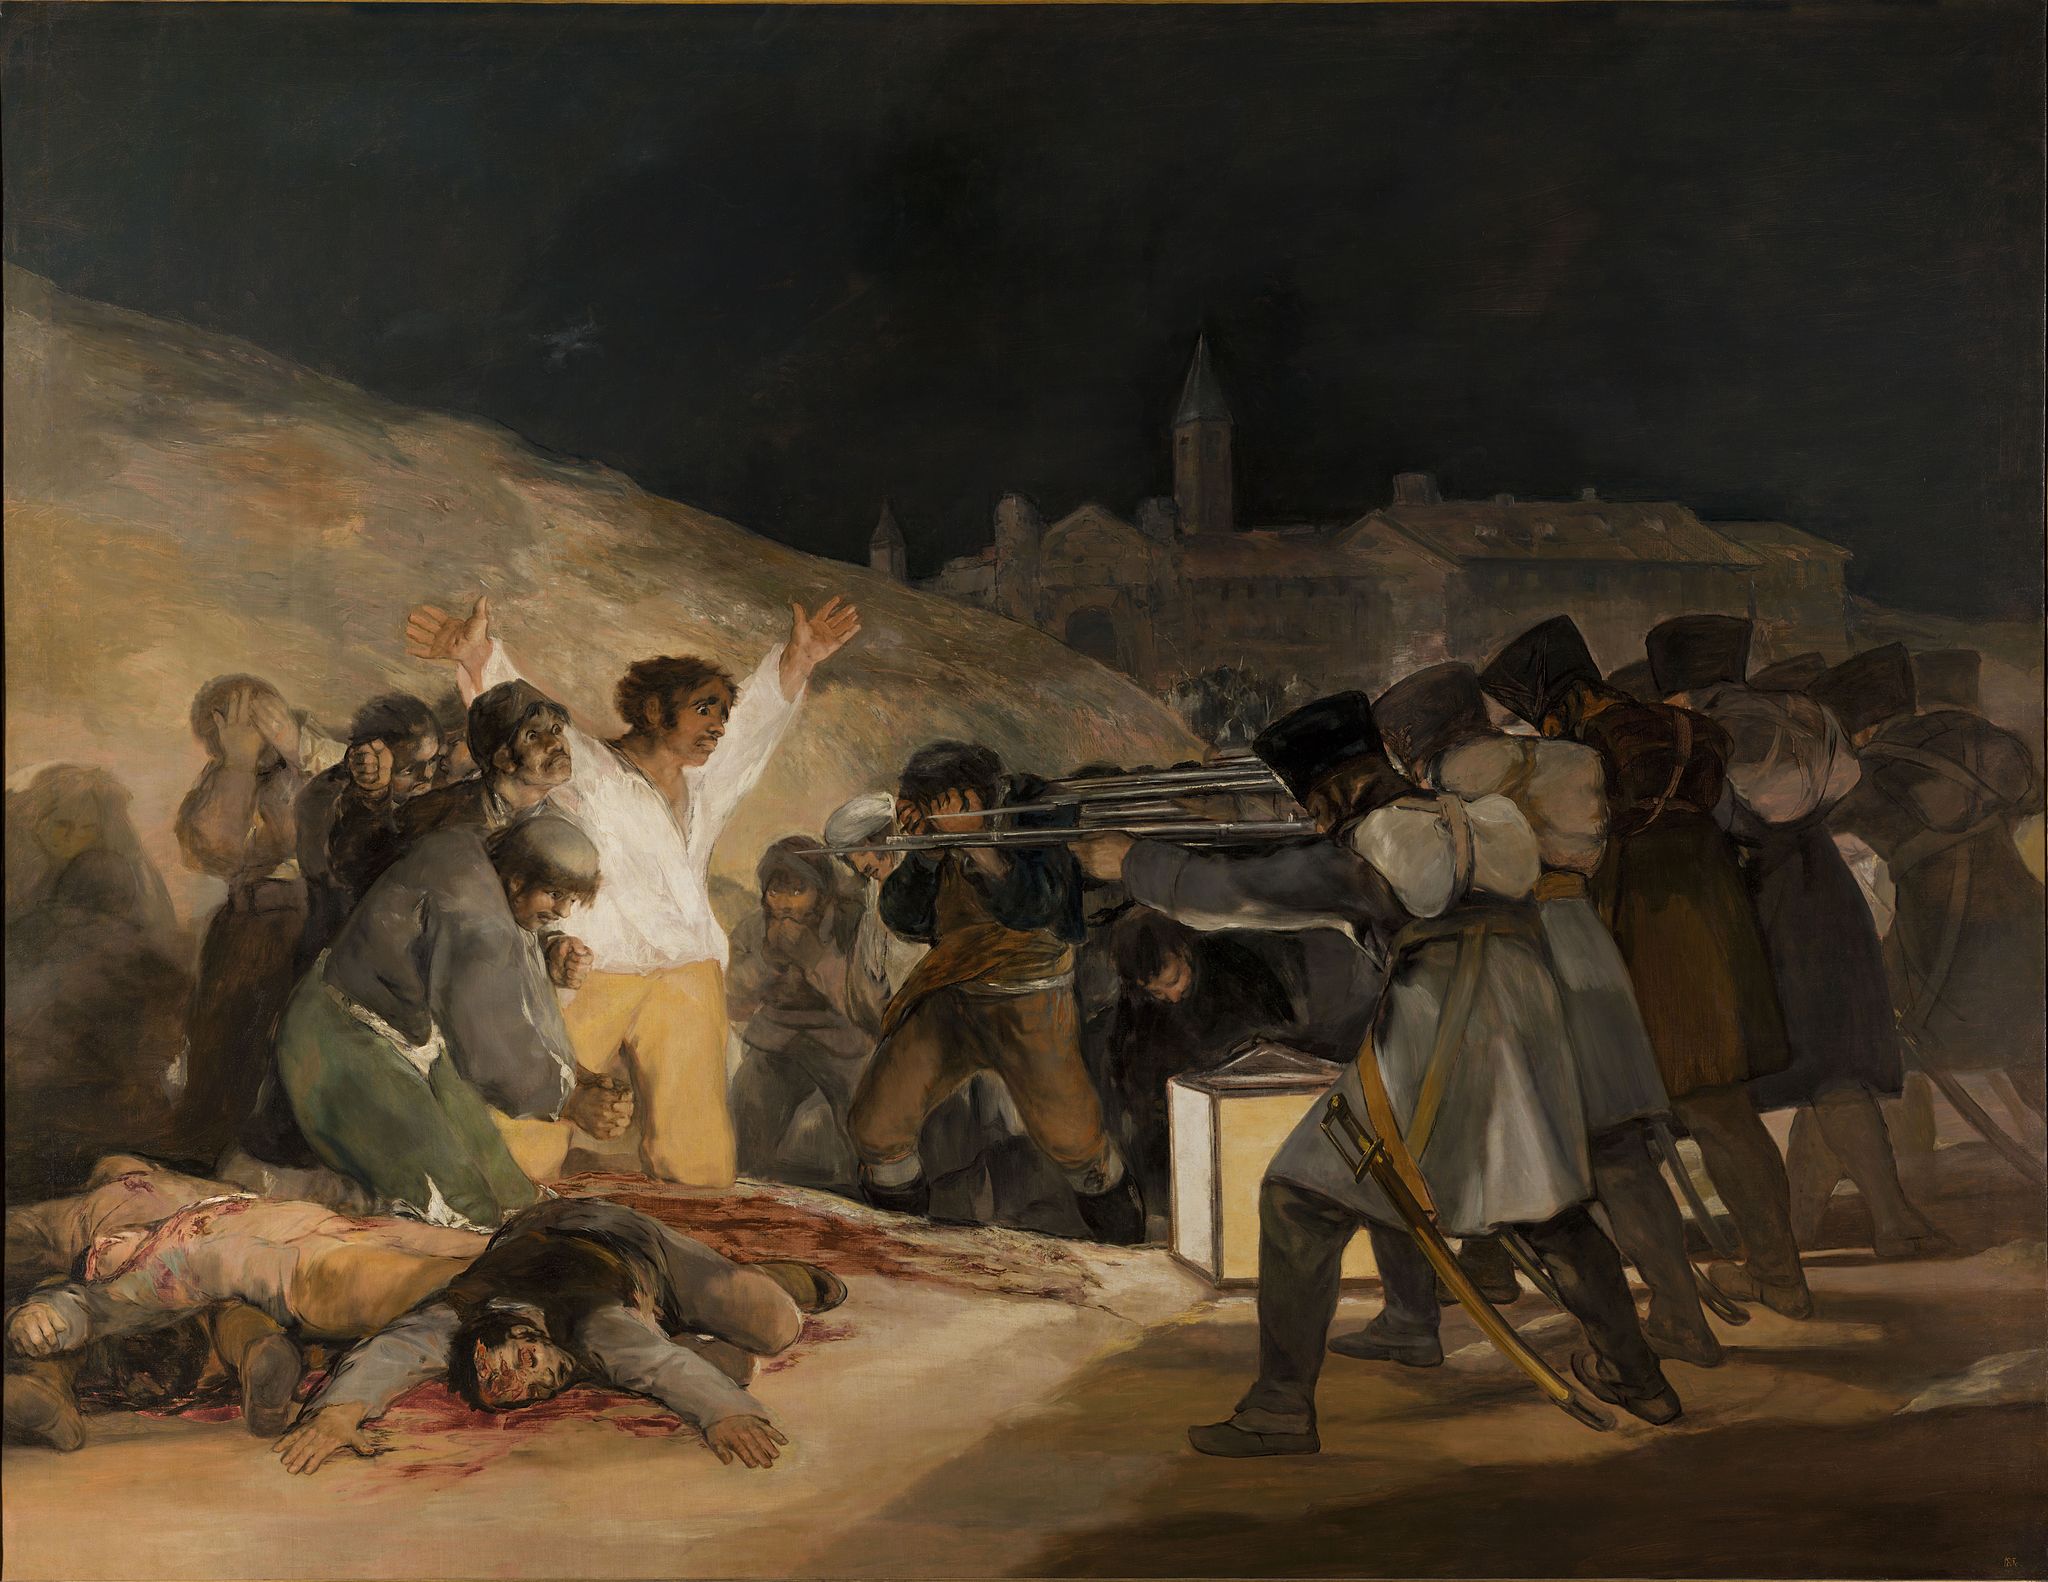 Goya's The Third of May - El Tres de Mayo